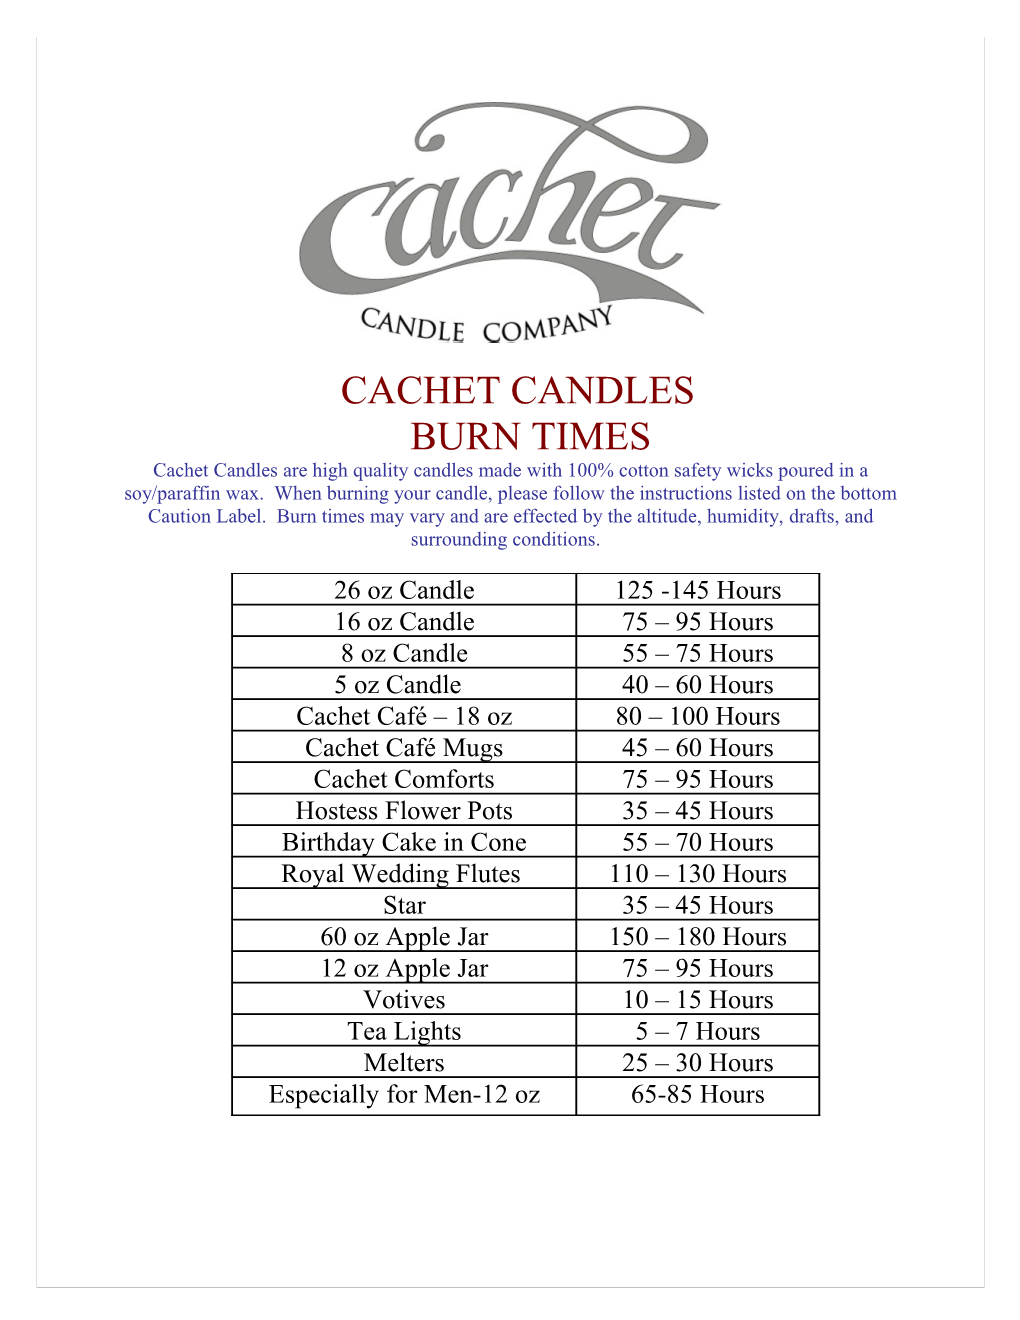 Cachet Candles